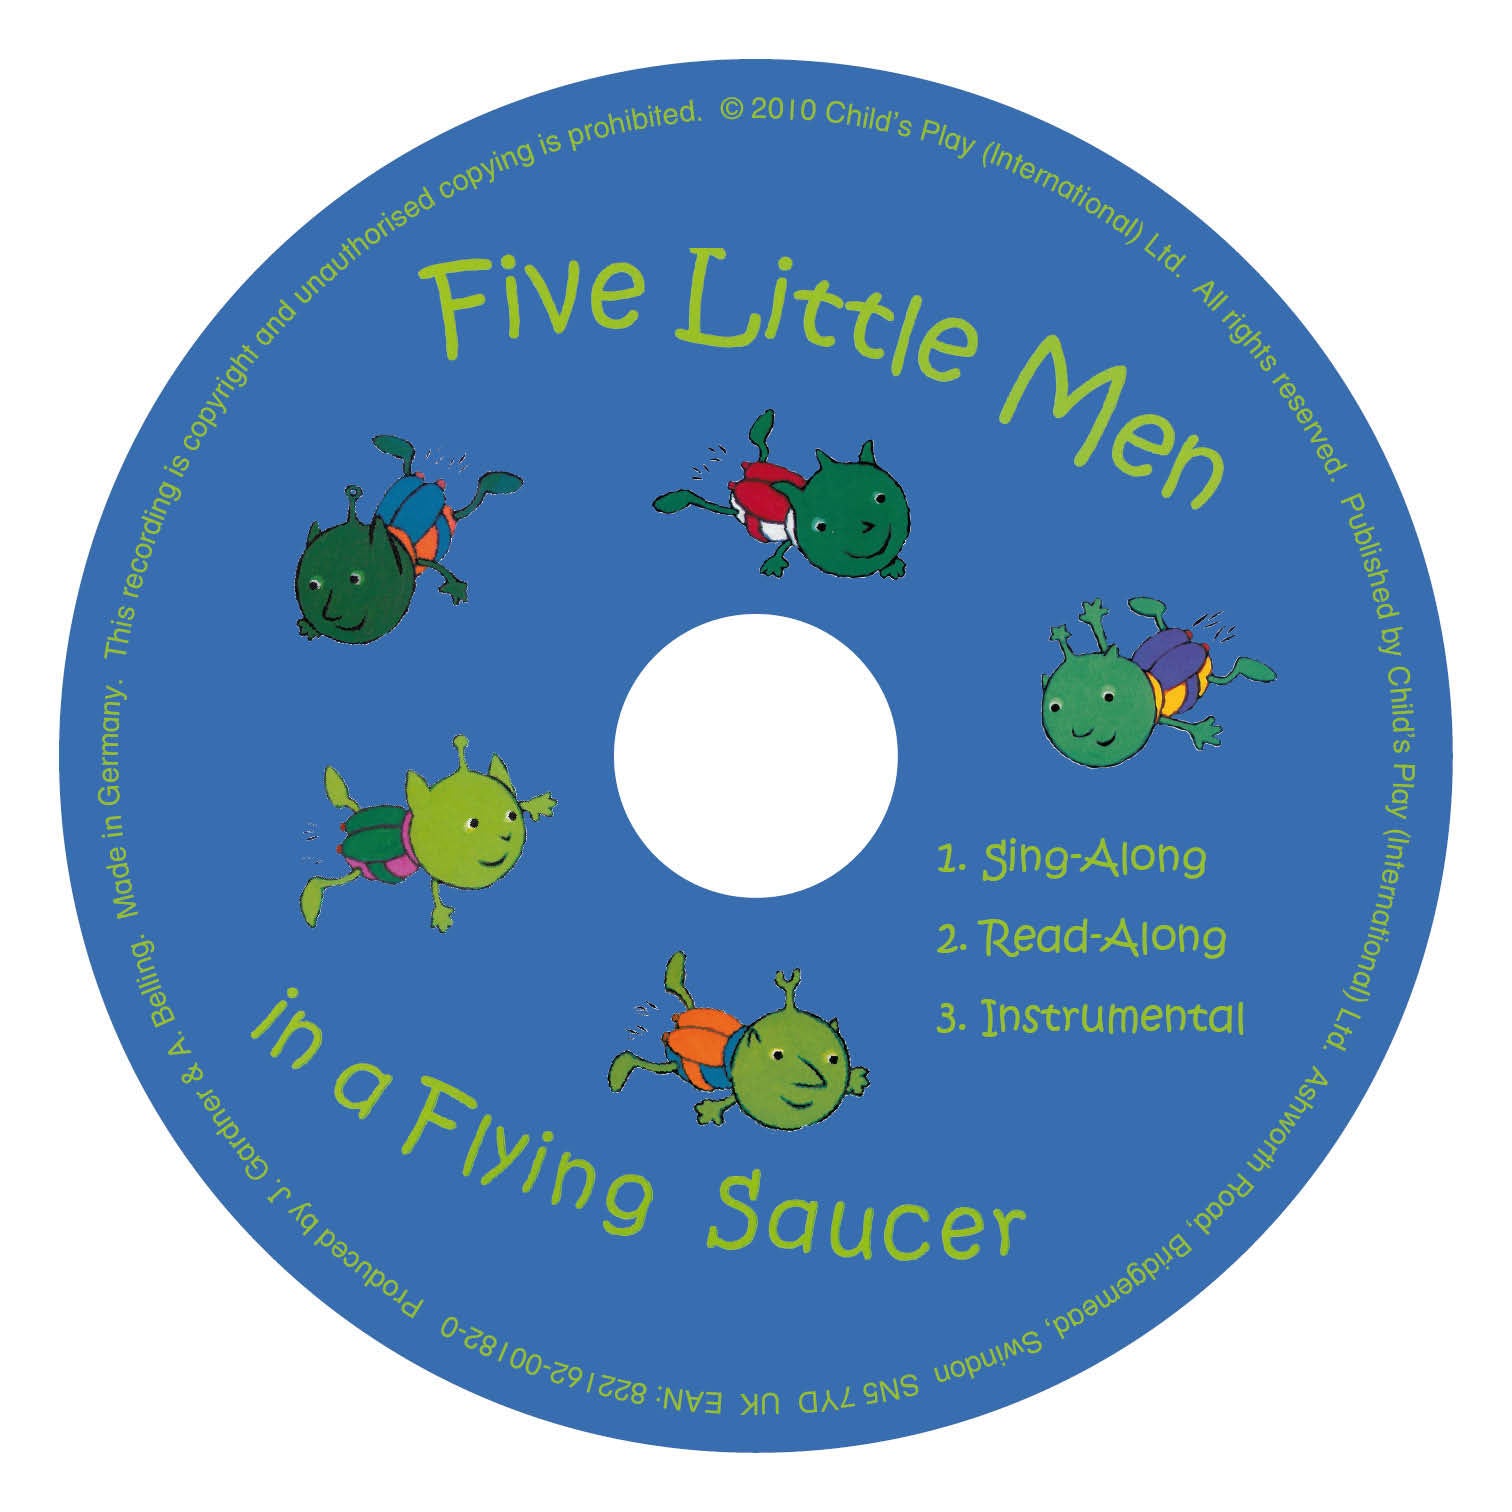 Five Little Men in a Flying Saucer CD